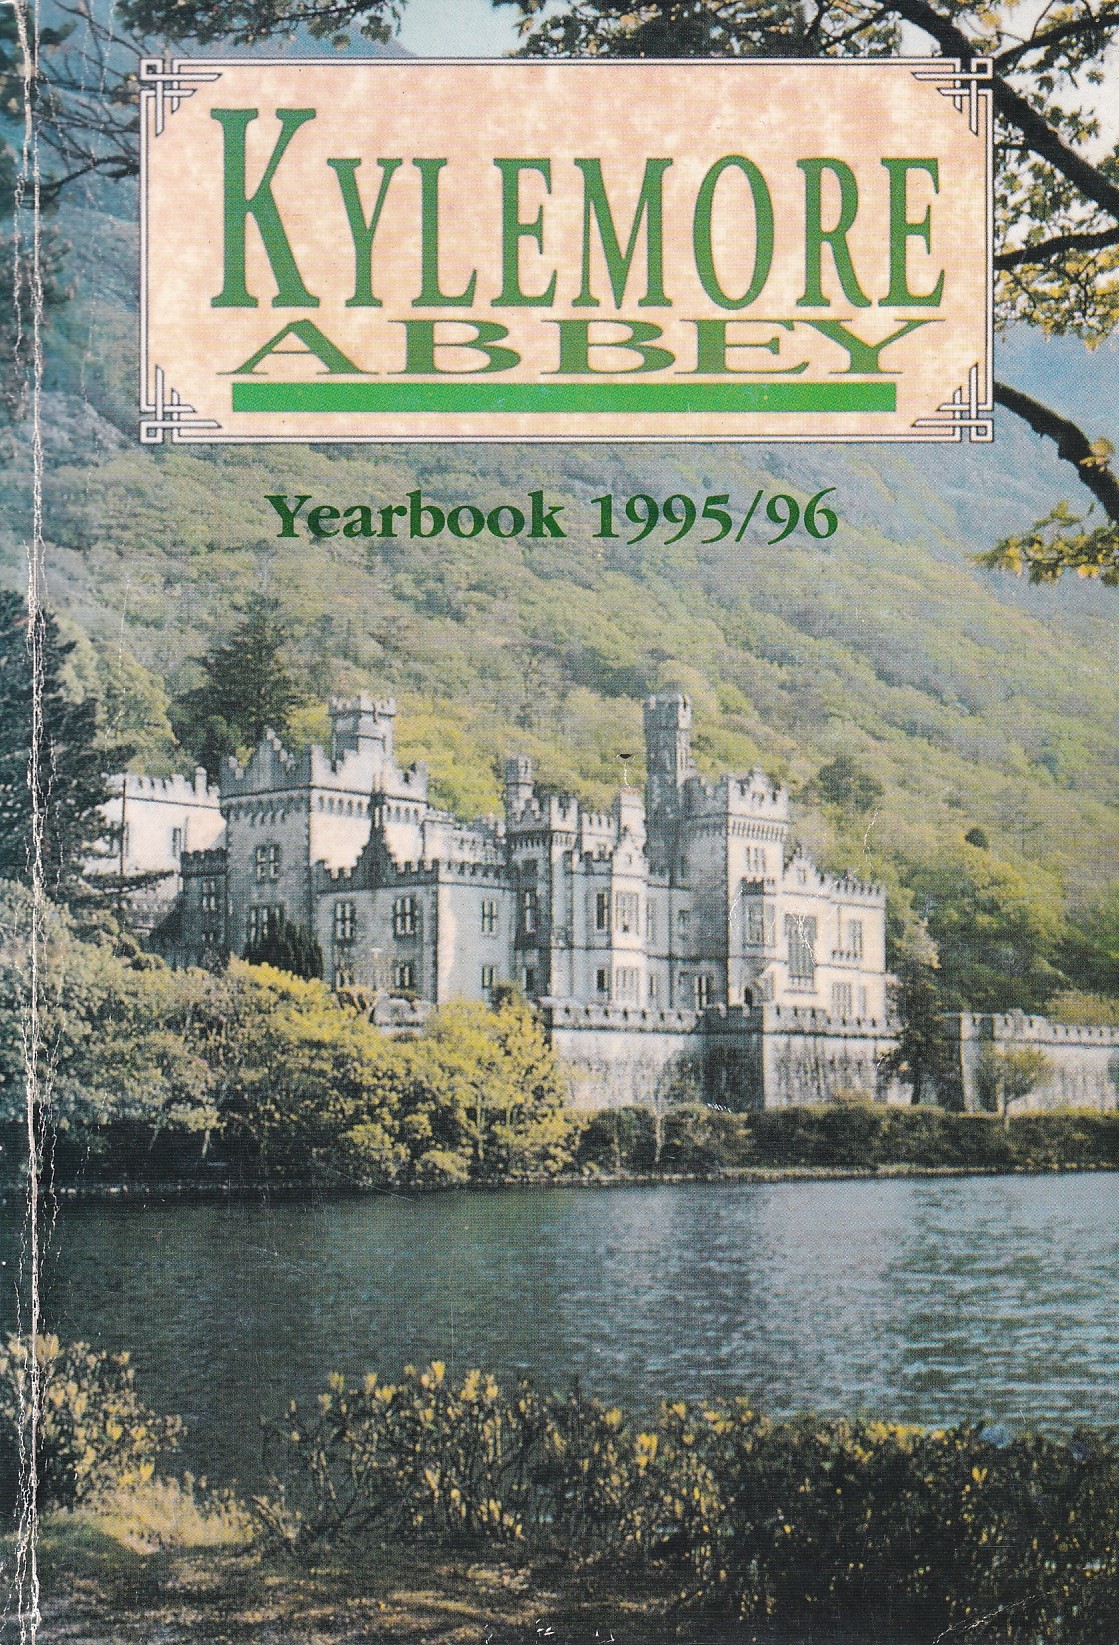 Kylemore Abbey Yearbook 1995/96 | Ed. Sr. Anna Sweeney O.S.B. | Charlie Byrne's